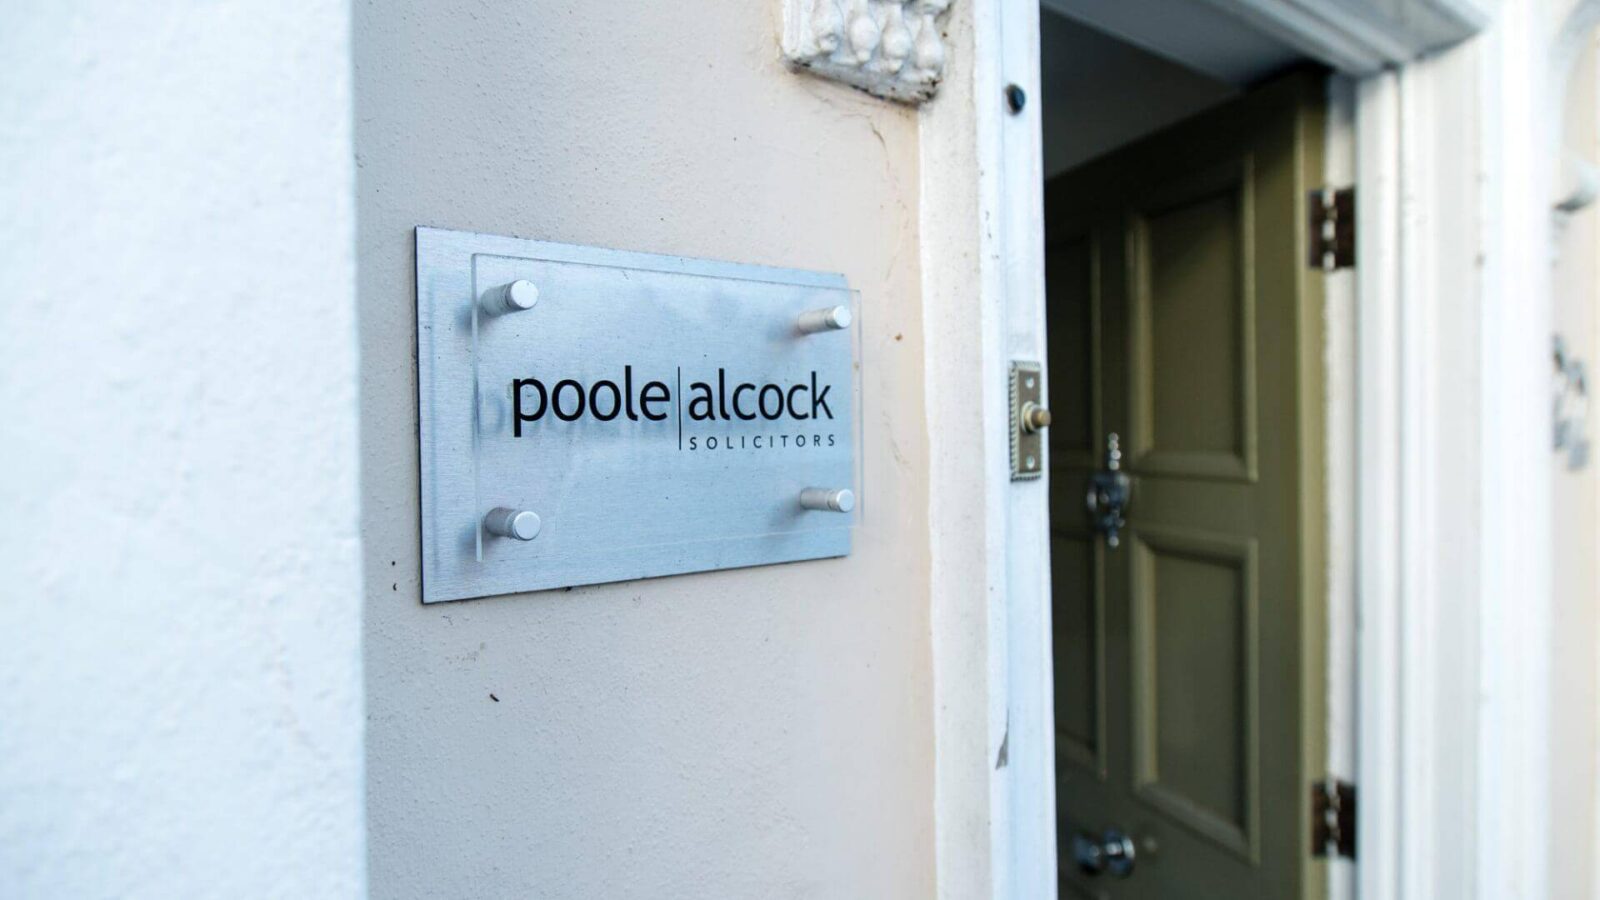 Poole Alcock solicitors